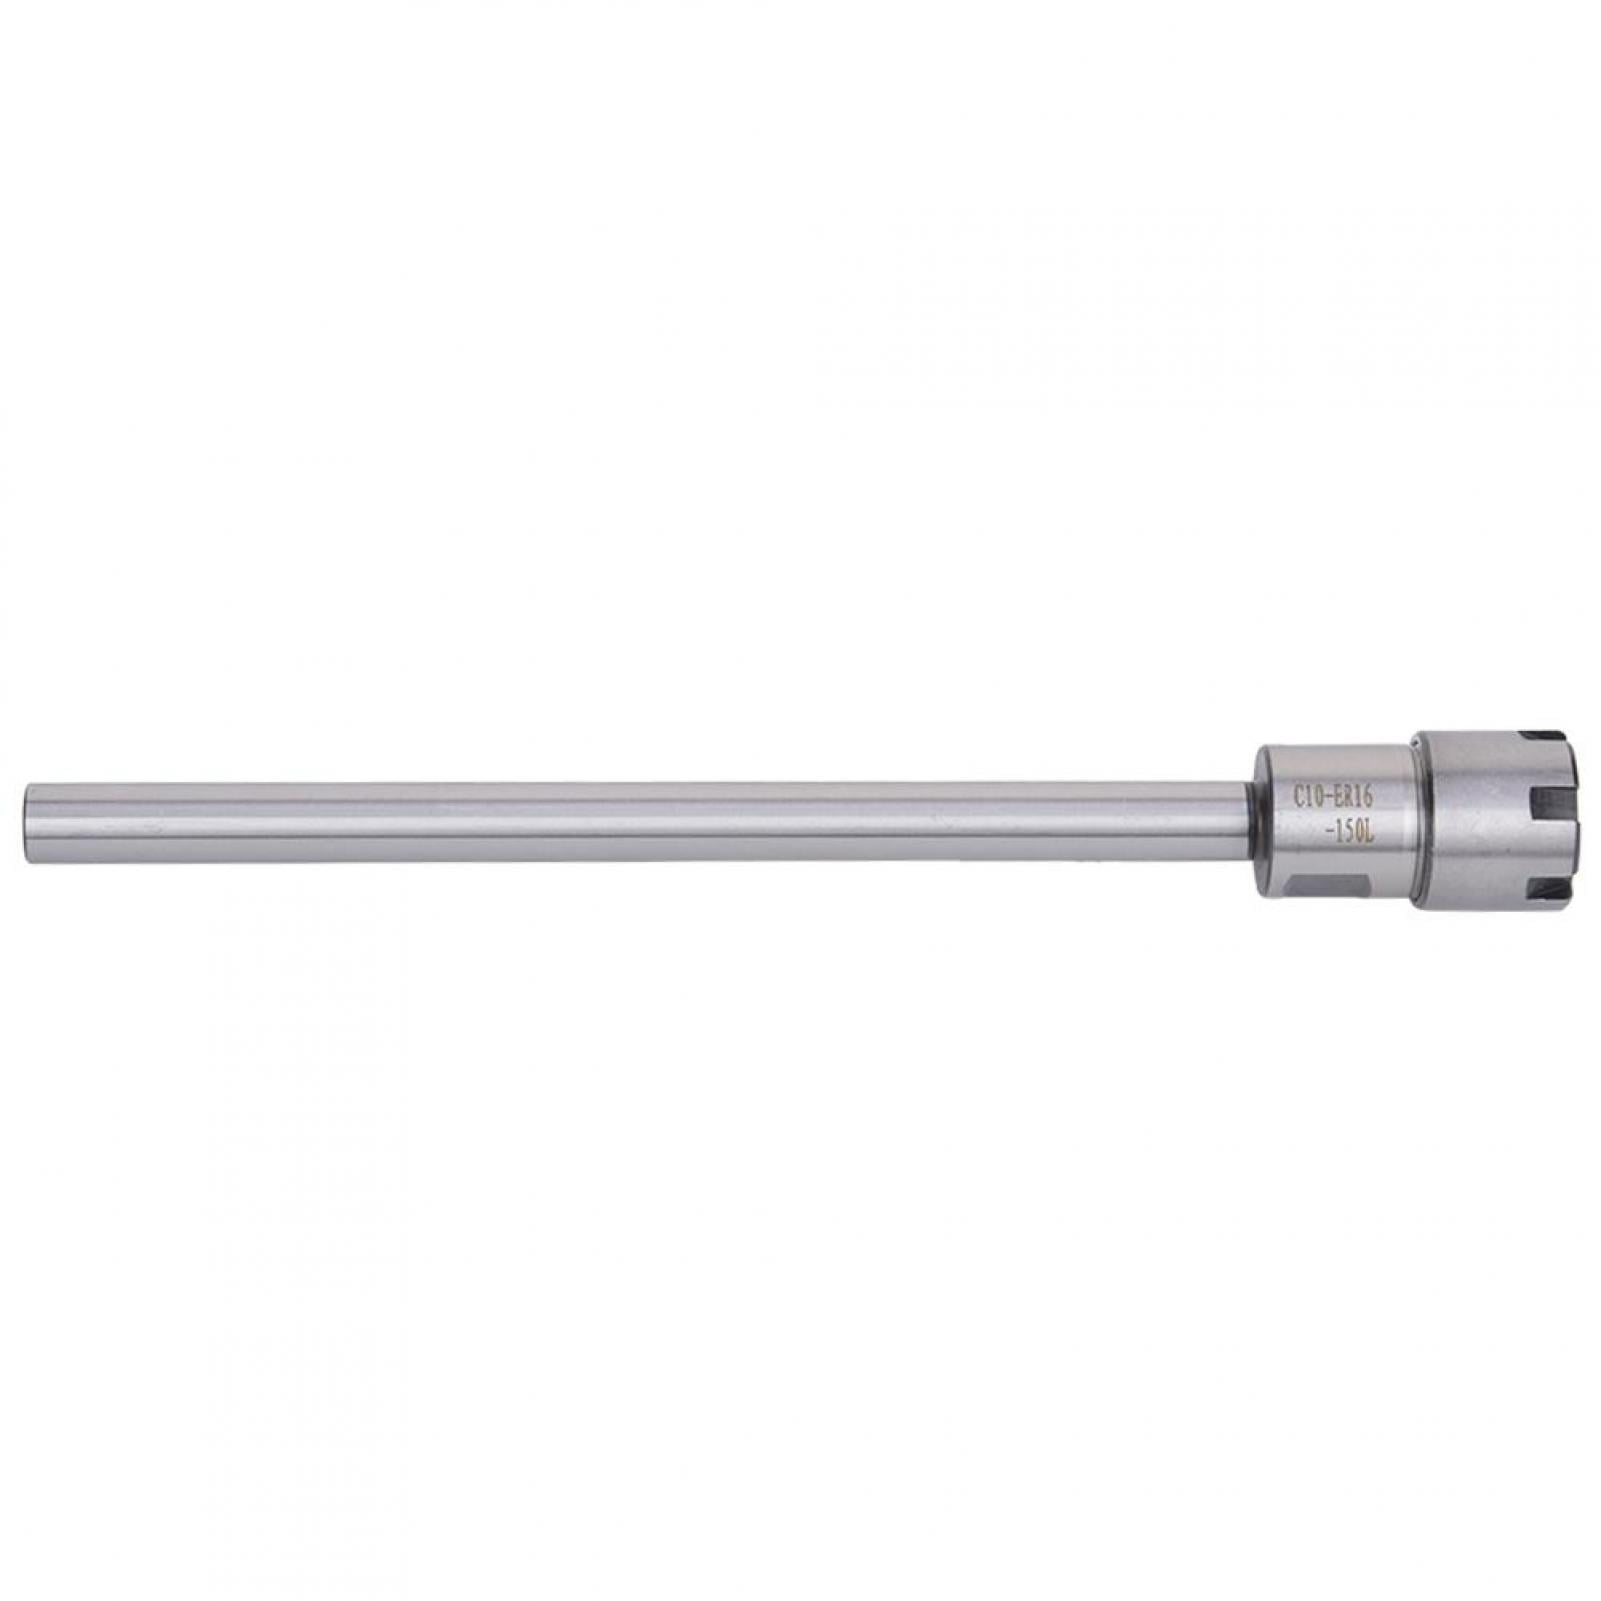 ER16M-150L Collet Chuck Holder Extension Rod Straight Shank CNC Milling Tool 